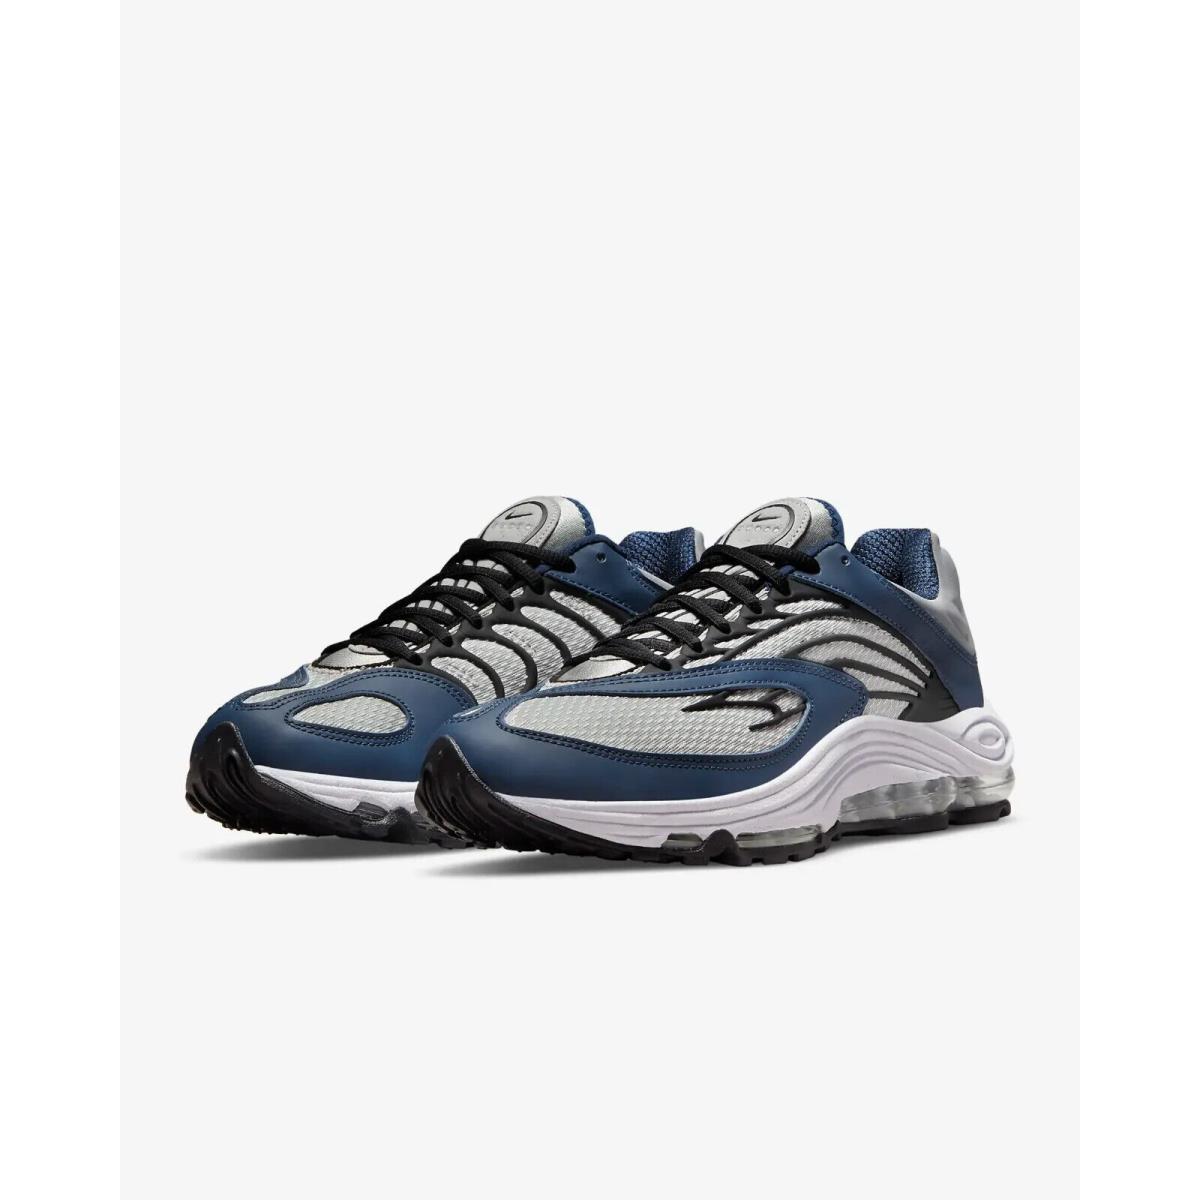 Nike shoes Air Tuned Max - Midnight Navy/Grey Fog/Metallic Silver 0